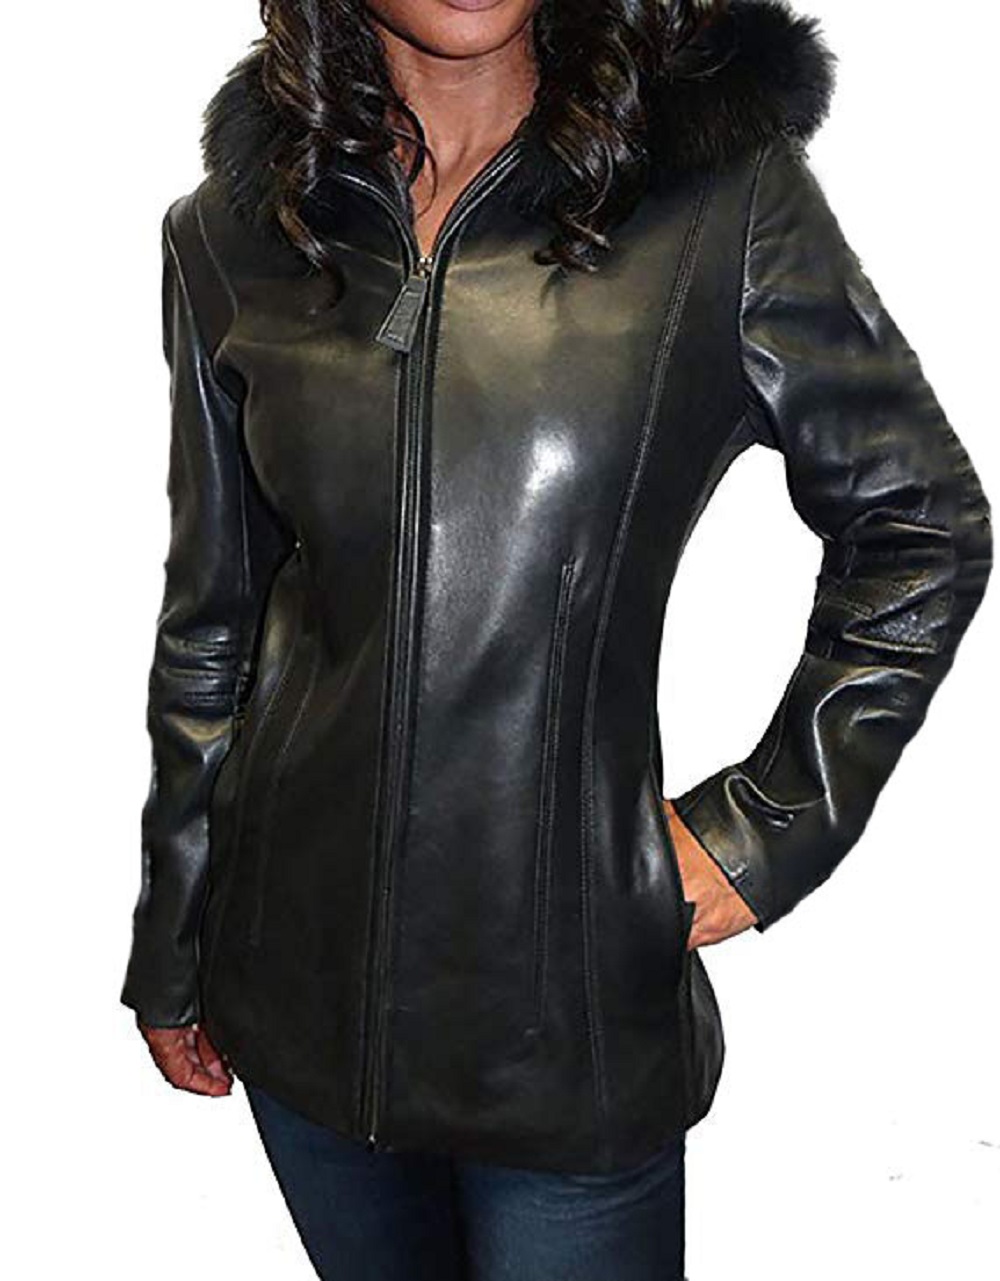 Mason & Cooper Fur Trim Hooded Leather Jacket - image 1 of 1